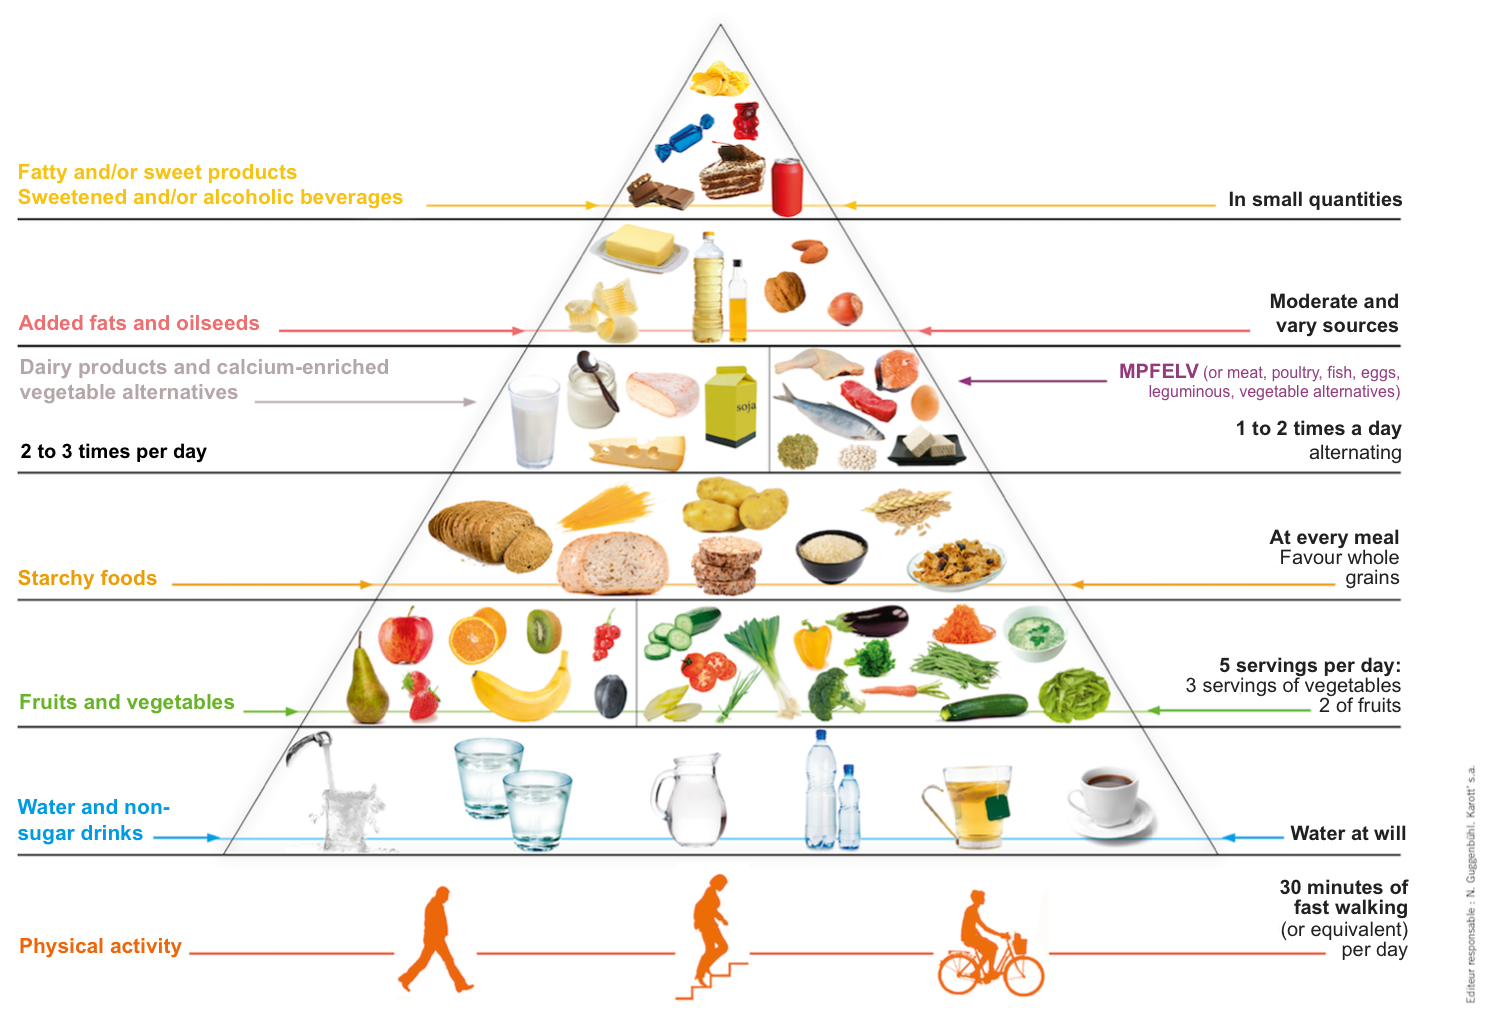 the food pyramid